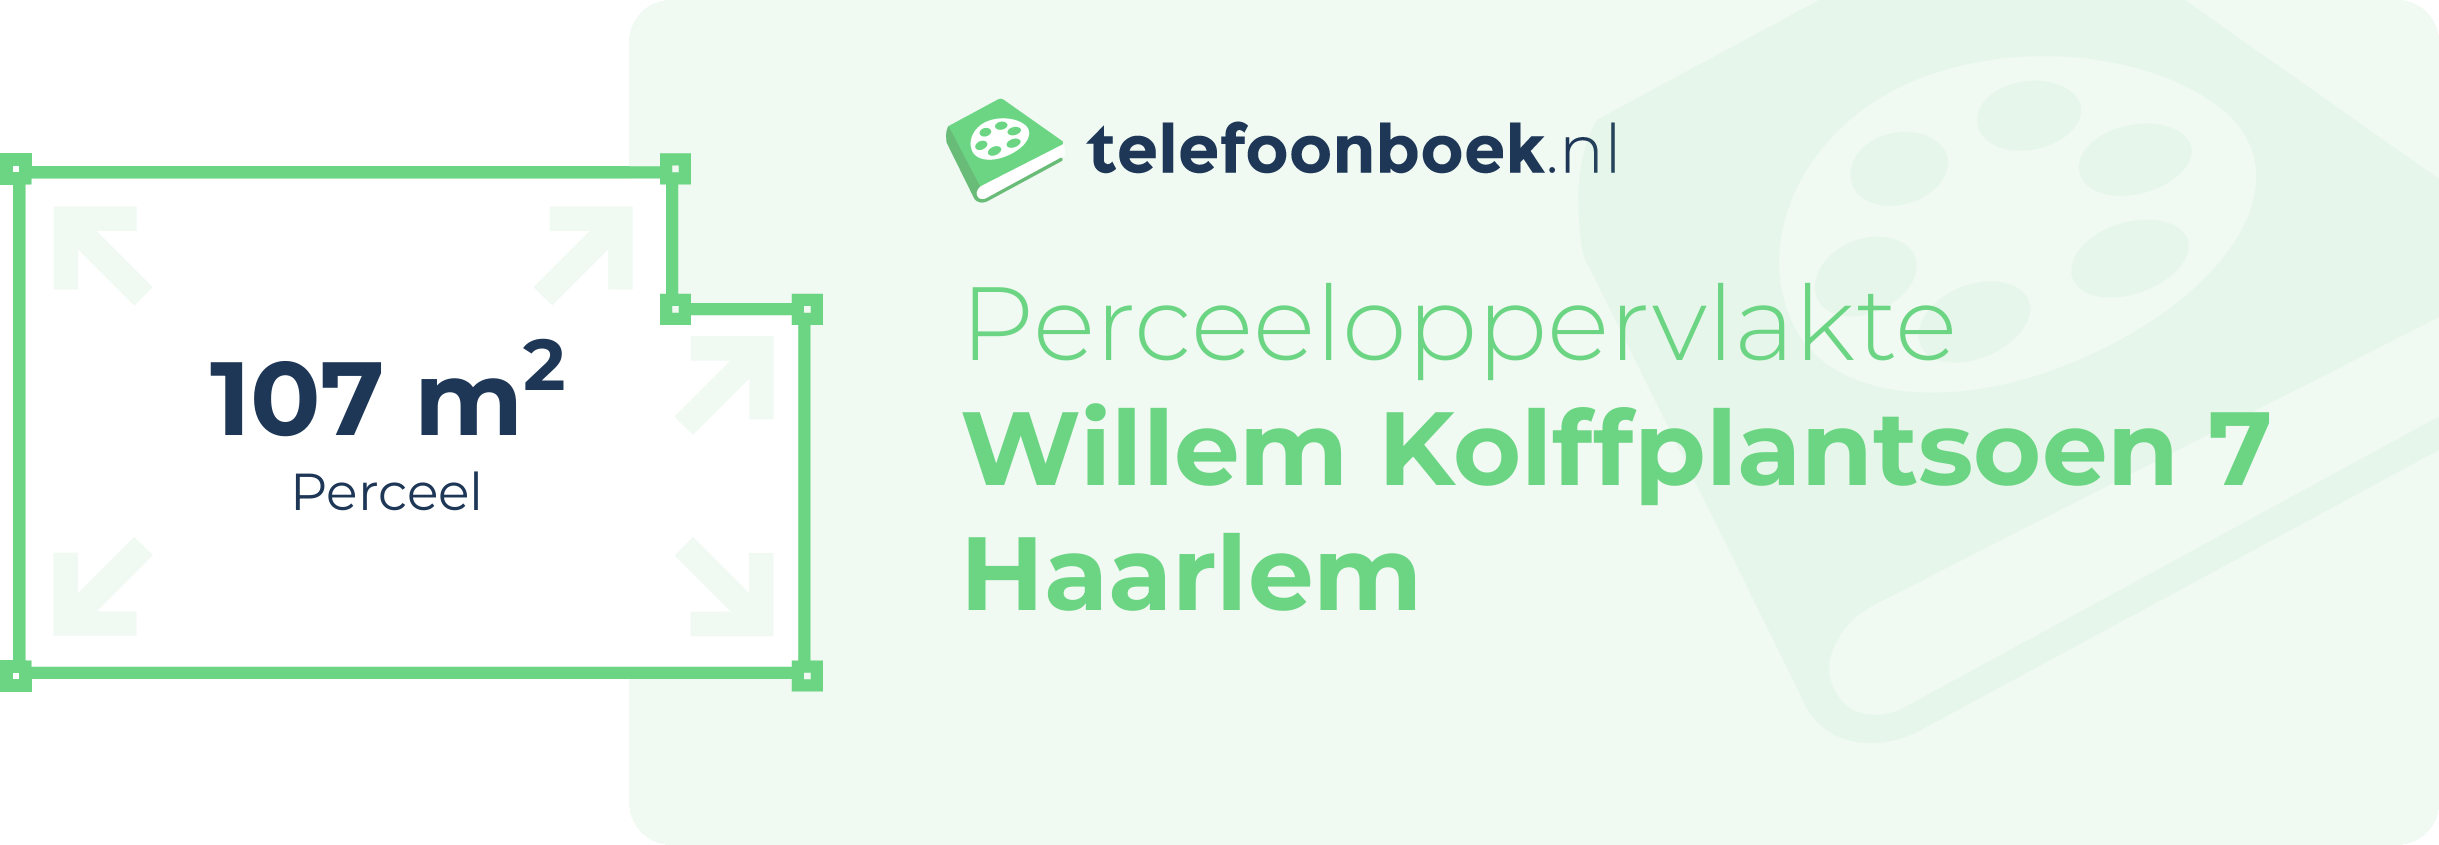 Perceeloppervlakte Willem Kolffplantsoen 7 Haarlem